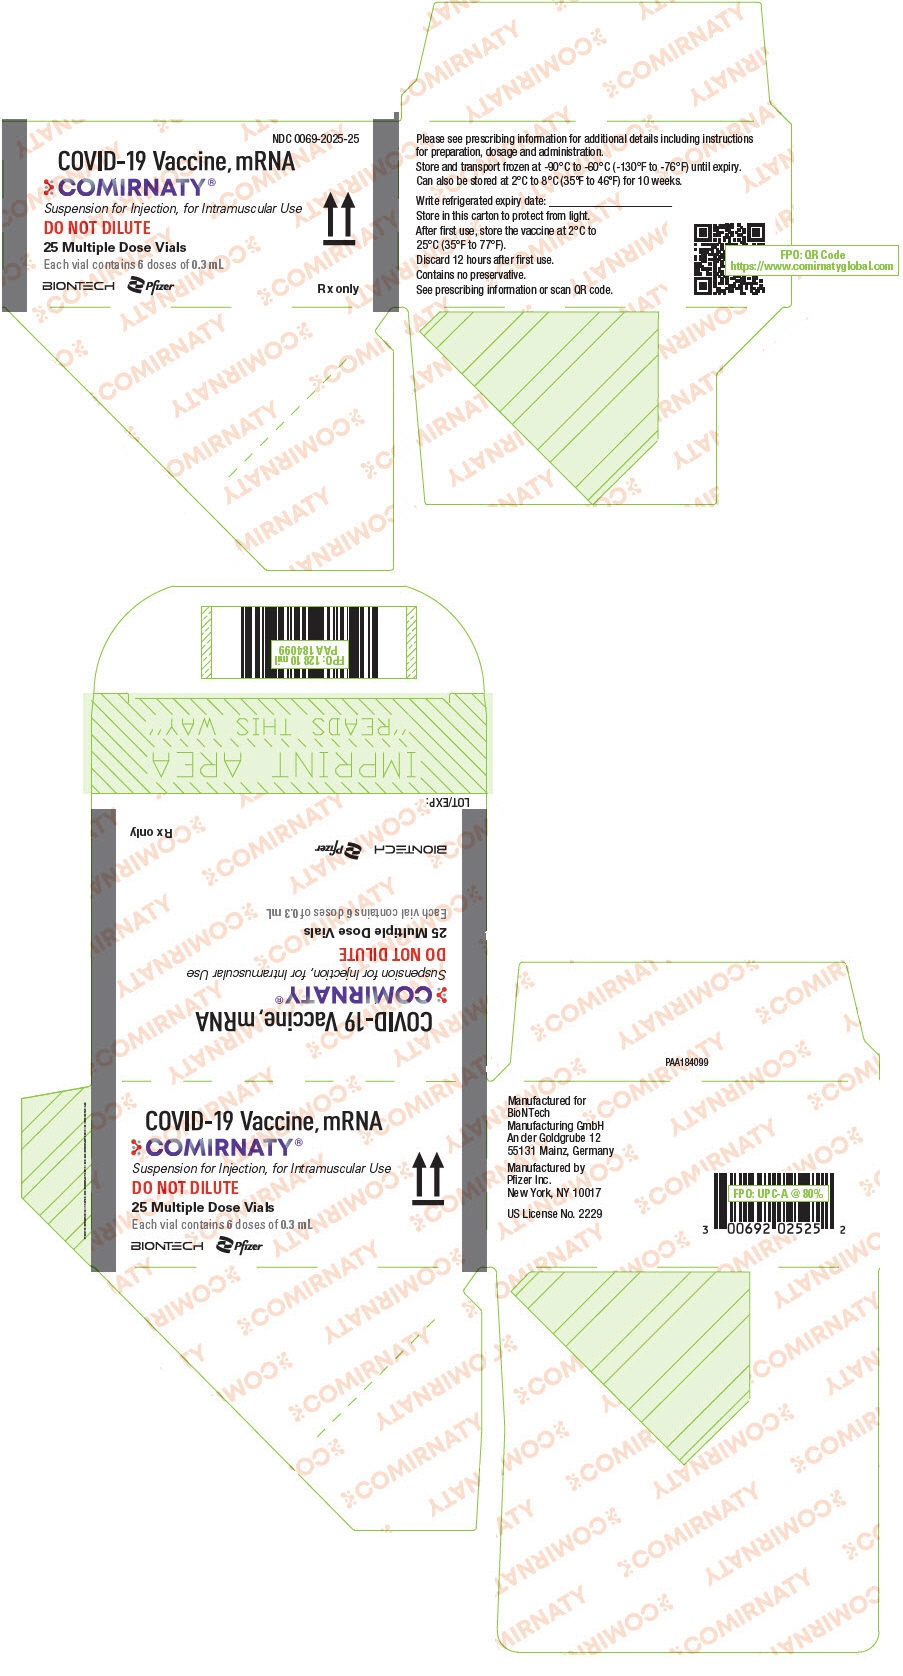 PRINCIPAL DISPLAY PANEL – 10 Prefilled Syringe Carton